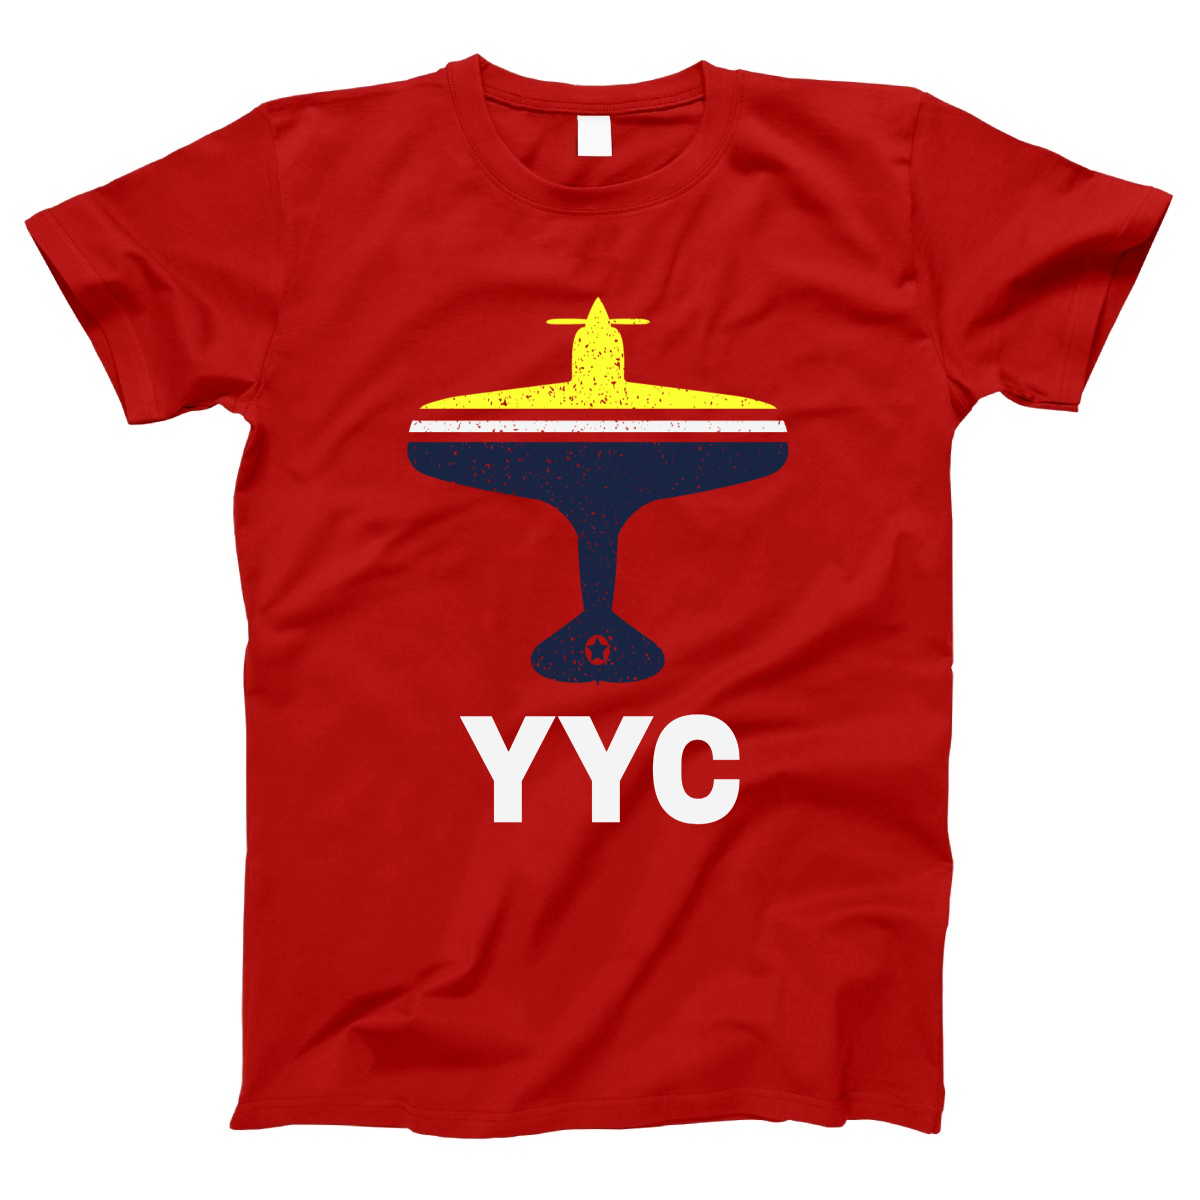 Fly Calgary YYC Airport Women's T-shirt | Red